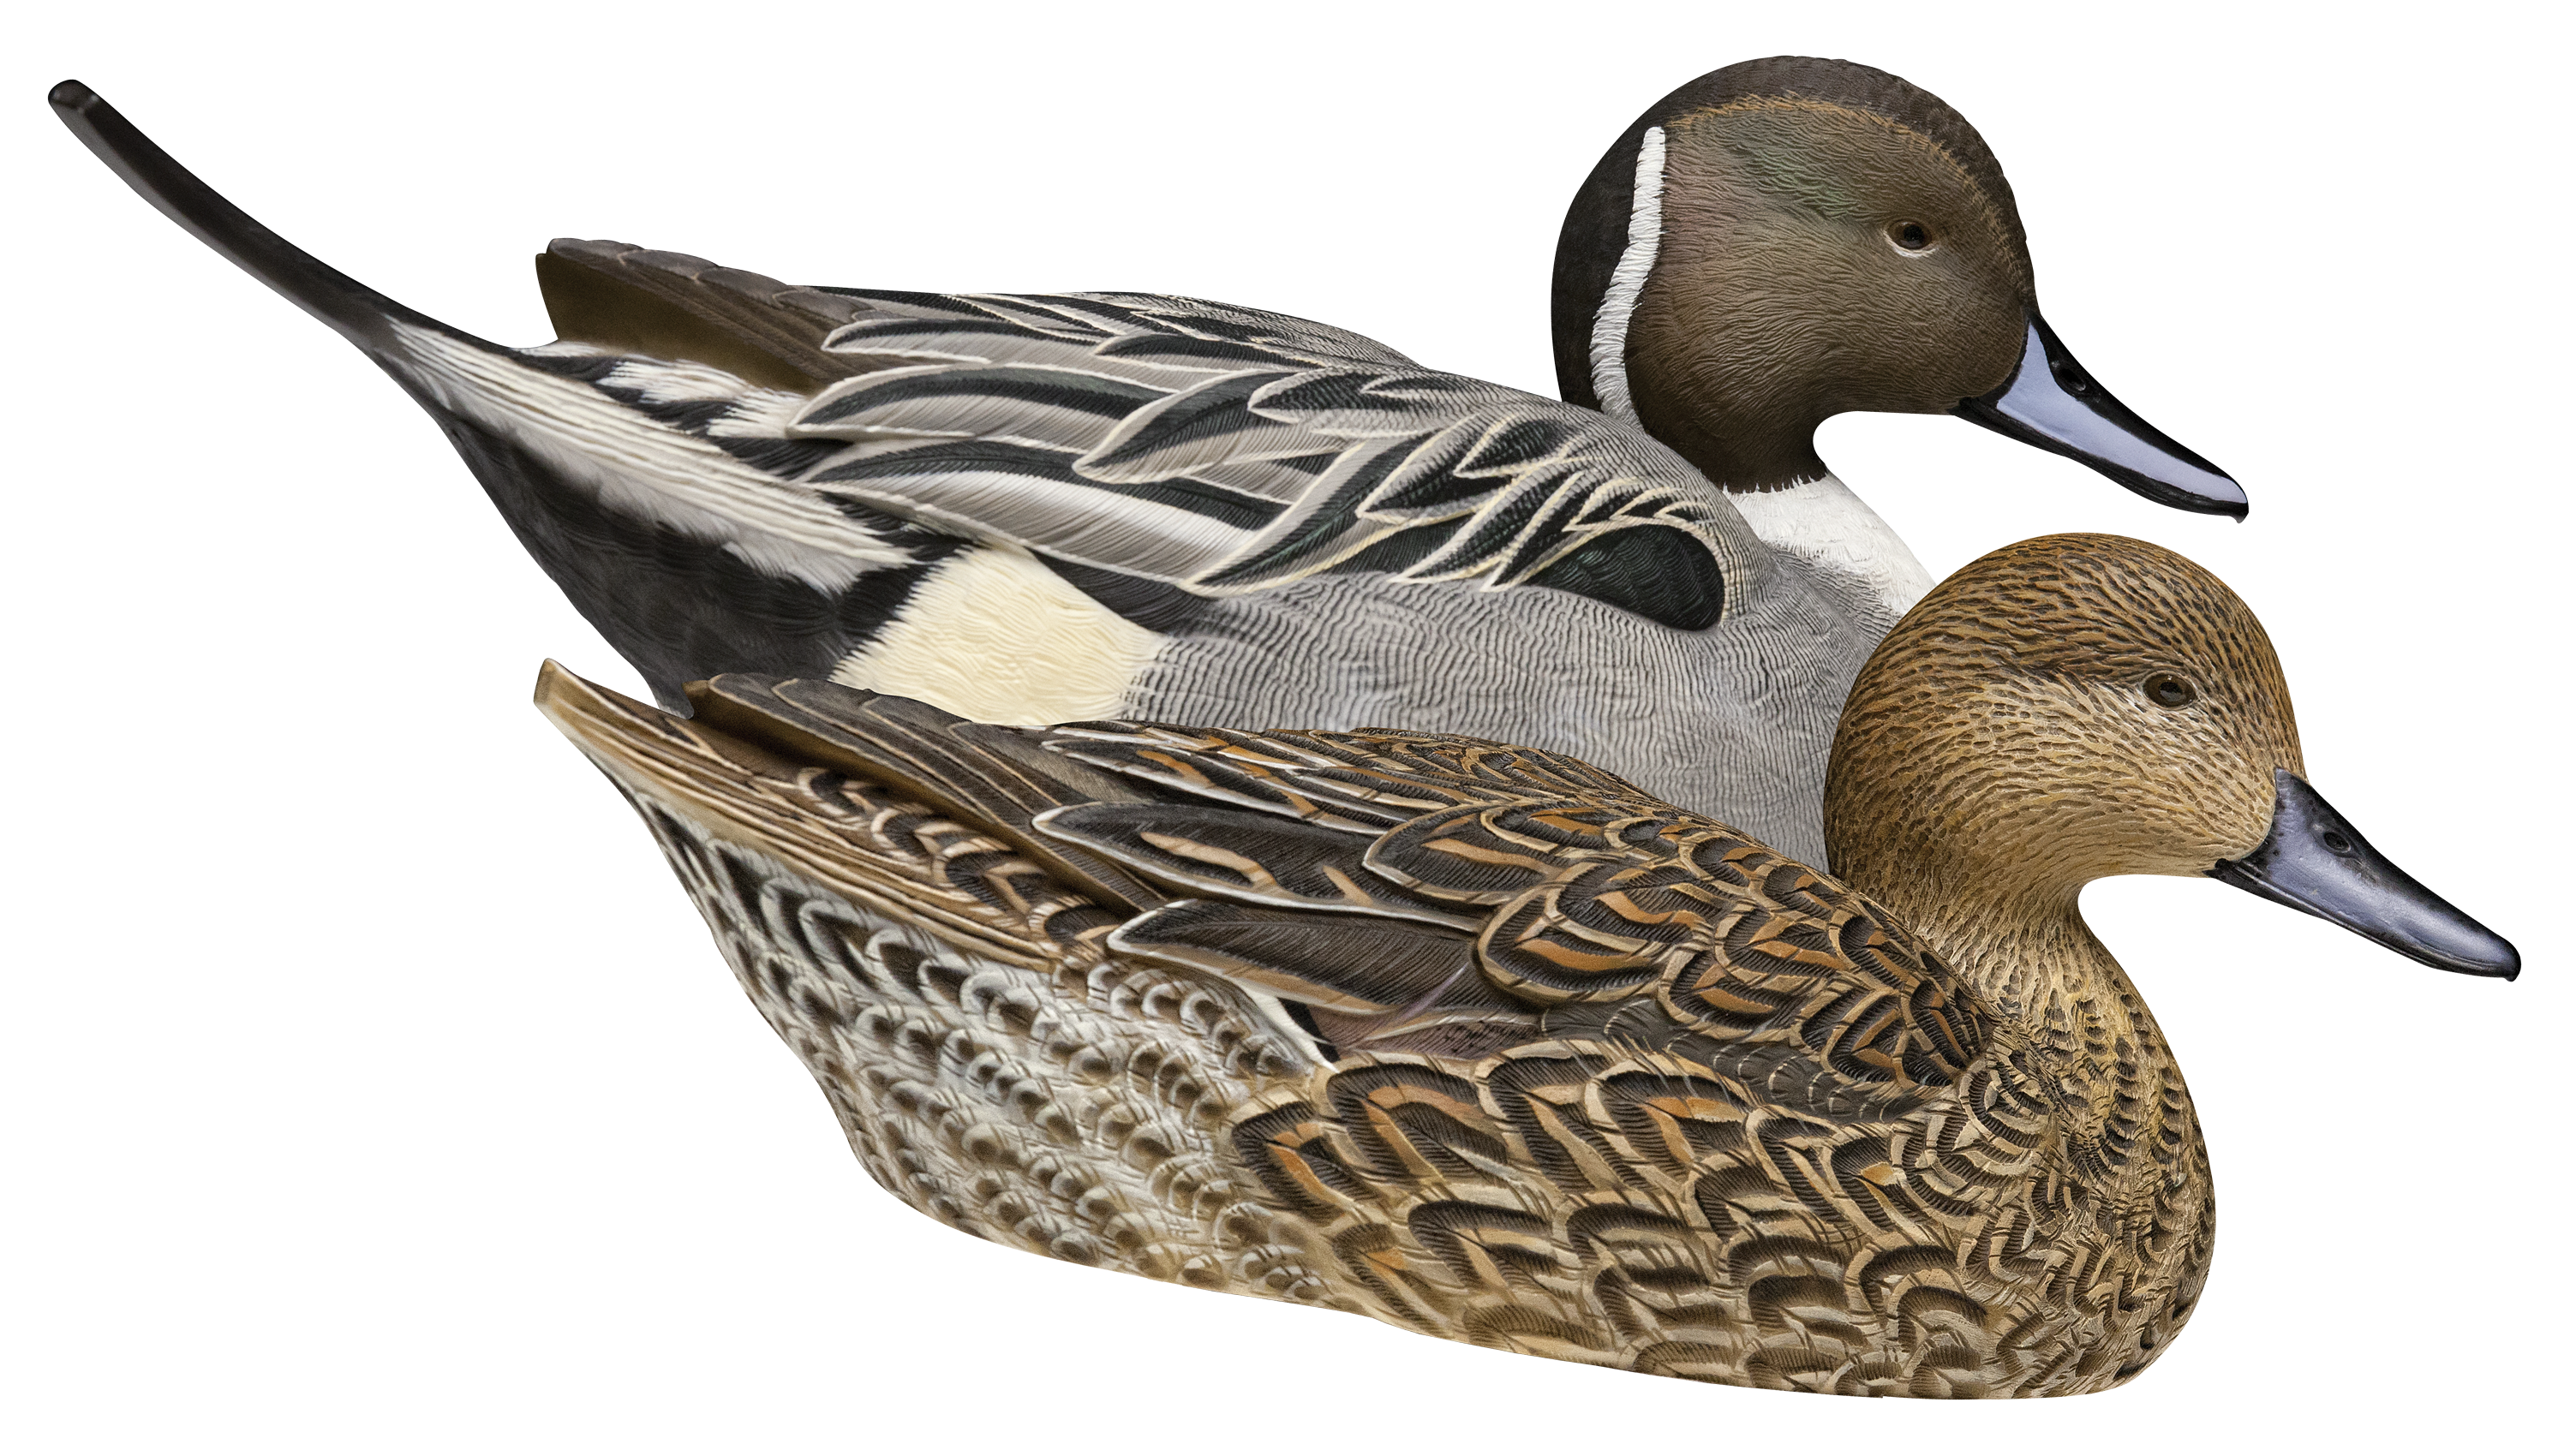 Avian-X Topflight Pintail Duck Decoys